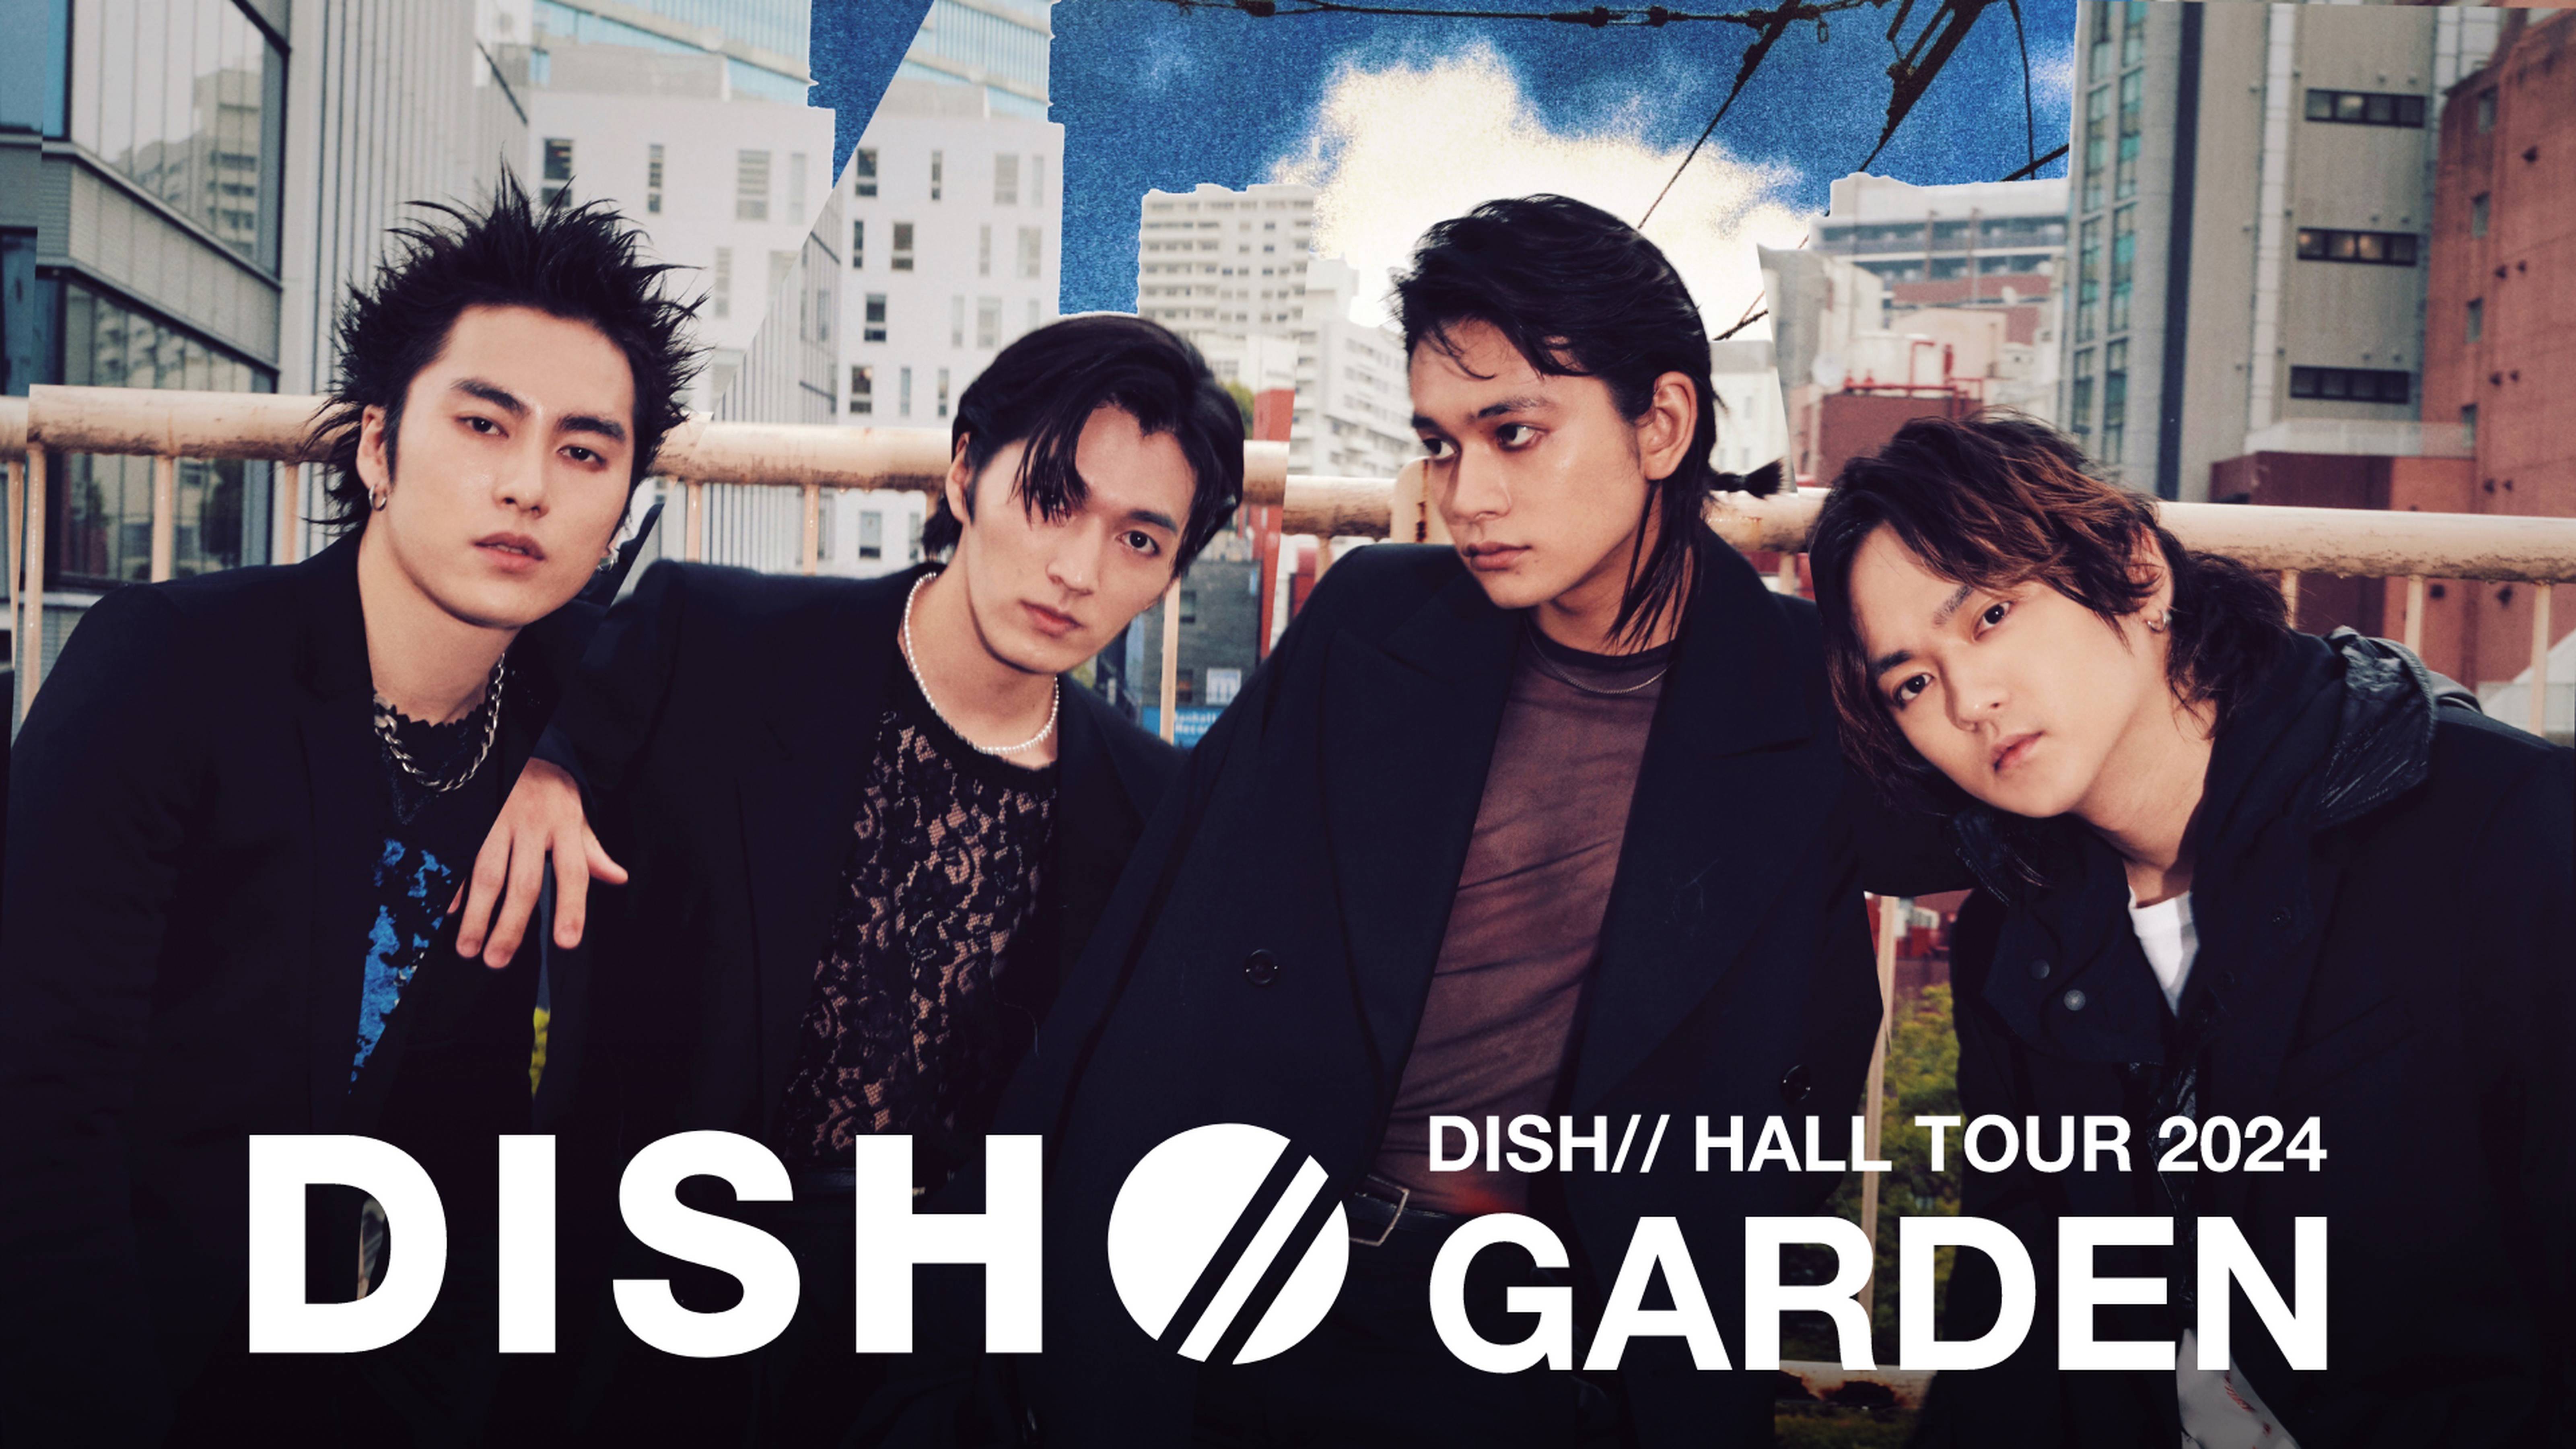 DISH// HALL TOUR 2024「GARDEN」